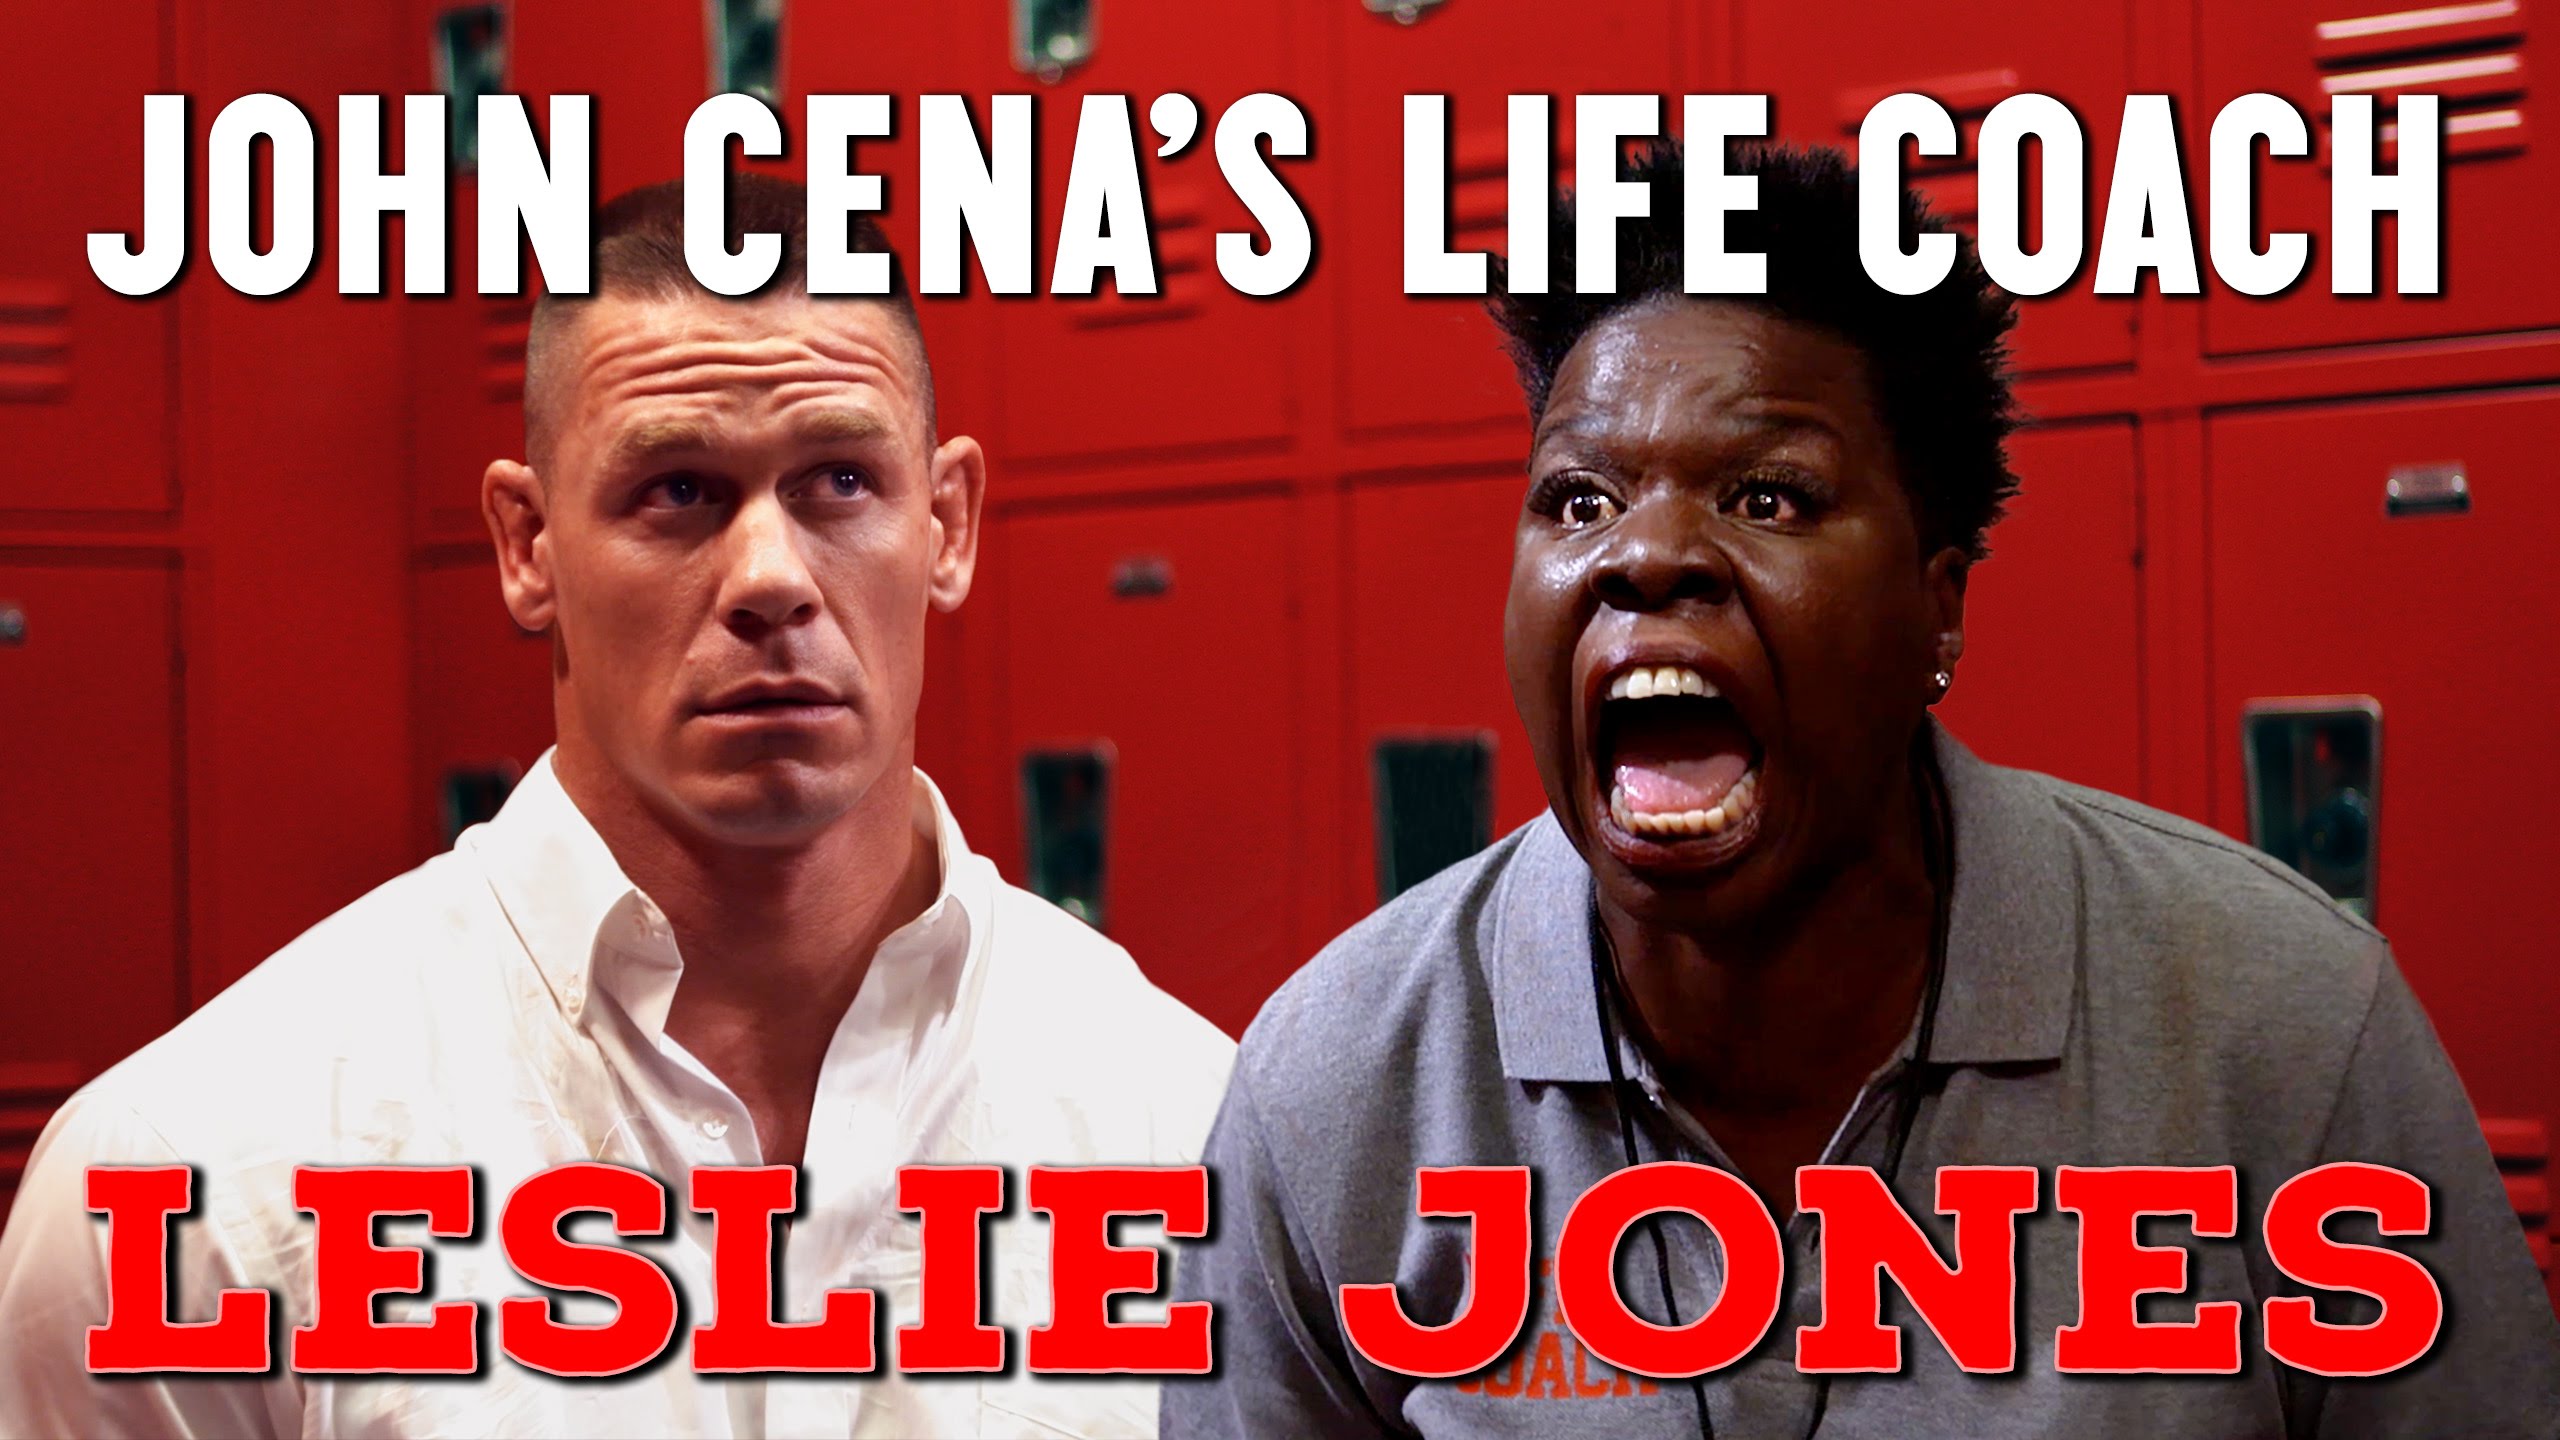 John Cena hires Leslie Jones as his life coach